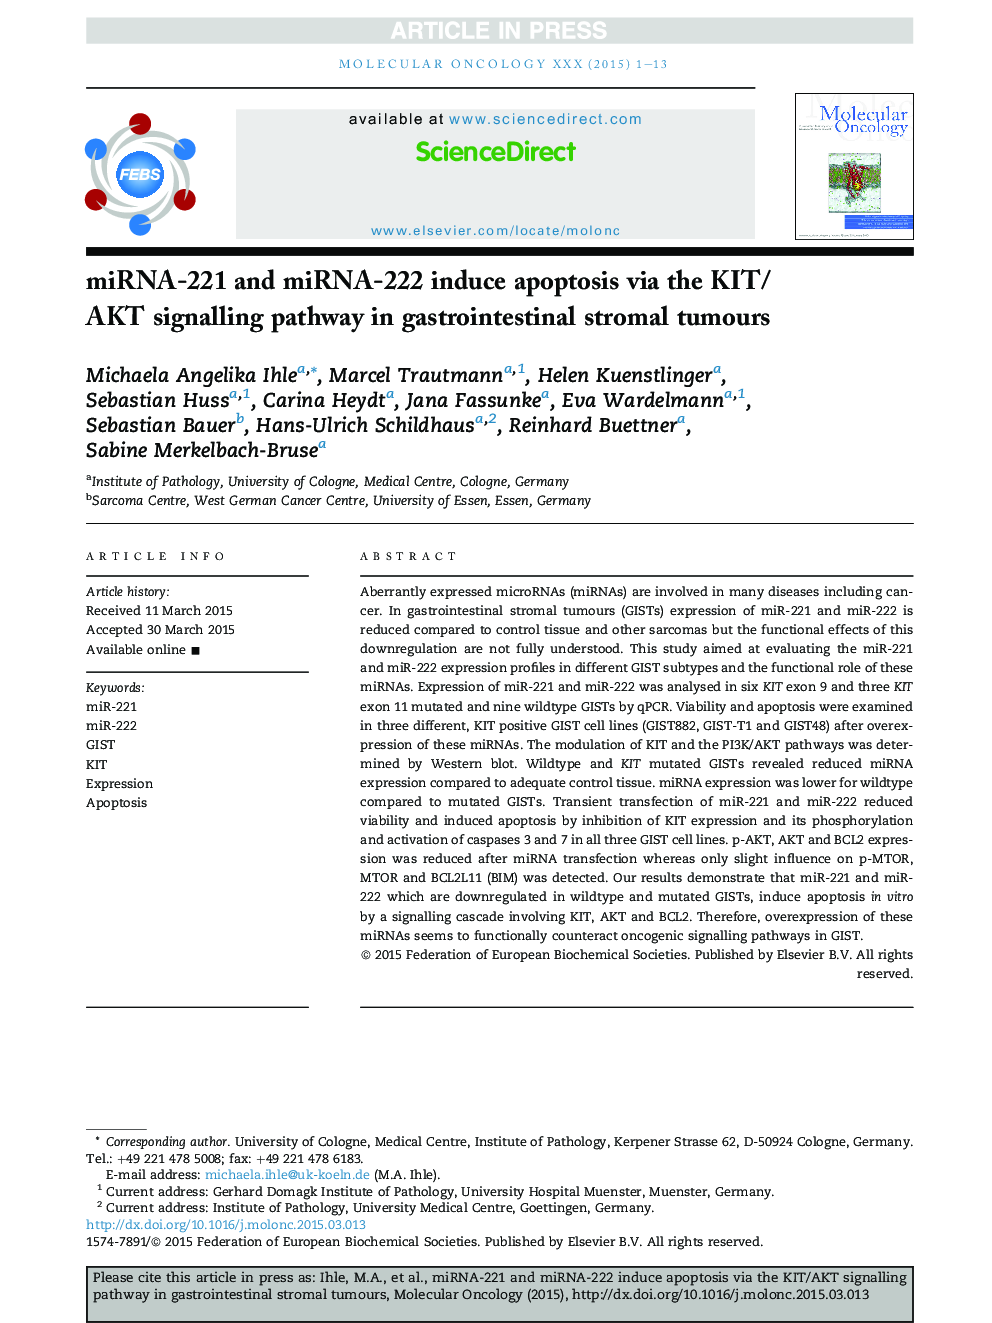 miRNA-221 and miRNA-222 induce apoptosis via the KIT/AKT signalling pathway in gastrointestinal stromal tumours